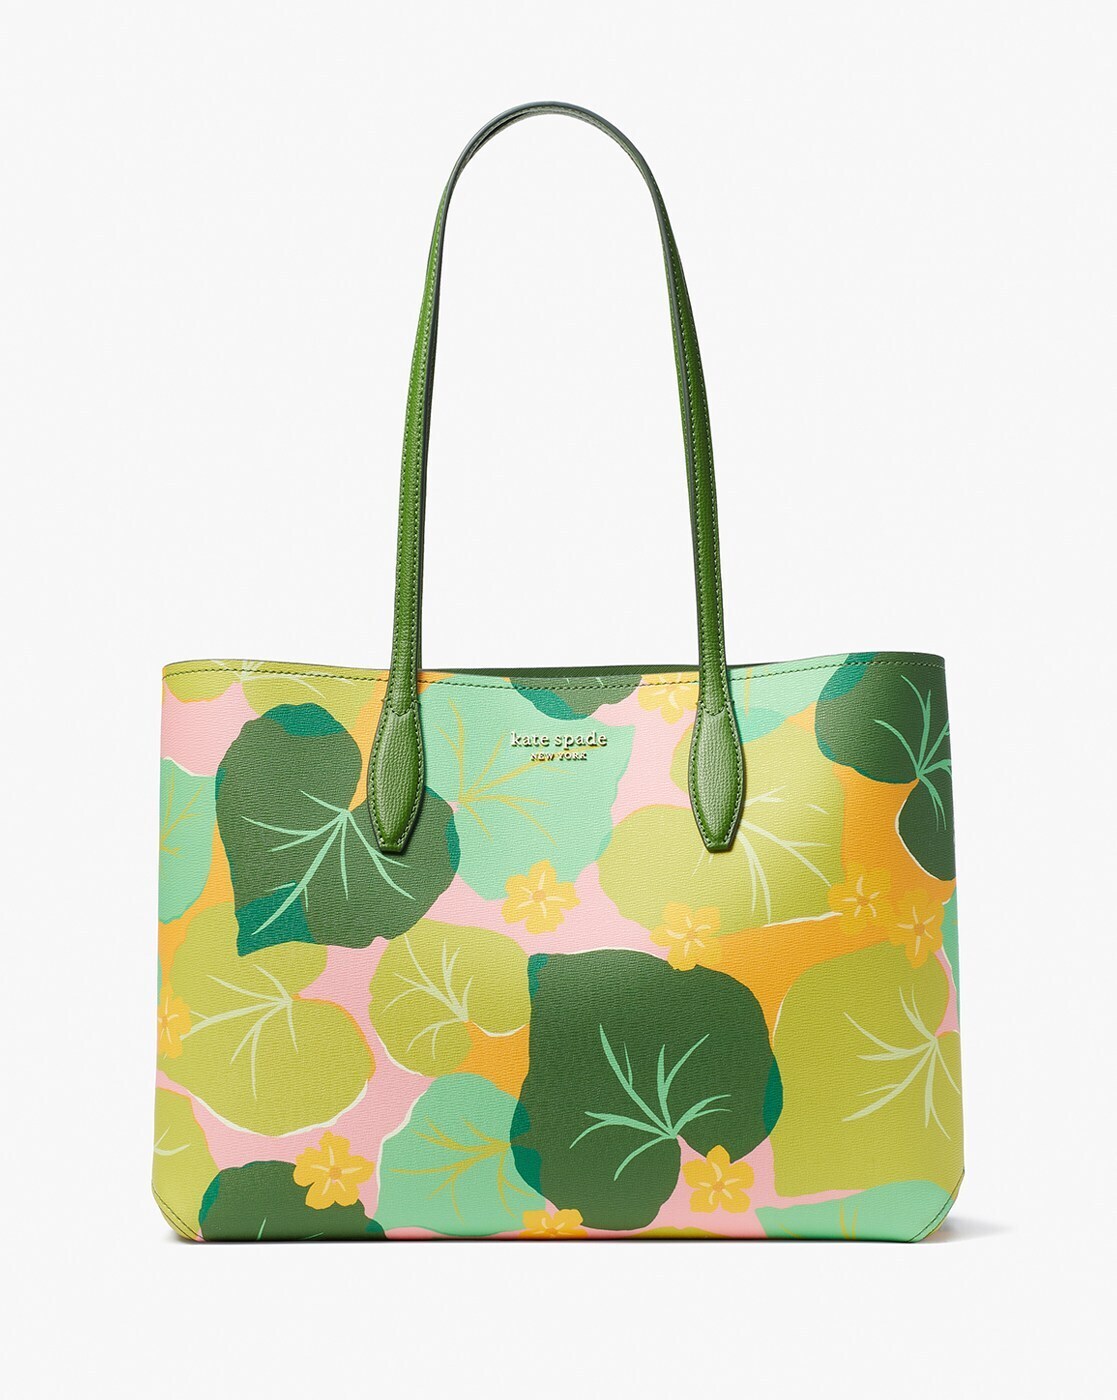 Kate Spade Pink & Green | Green purse, Fun bags, Pink and green